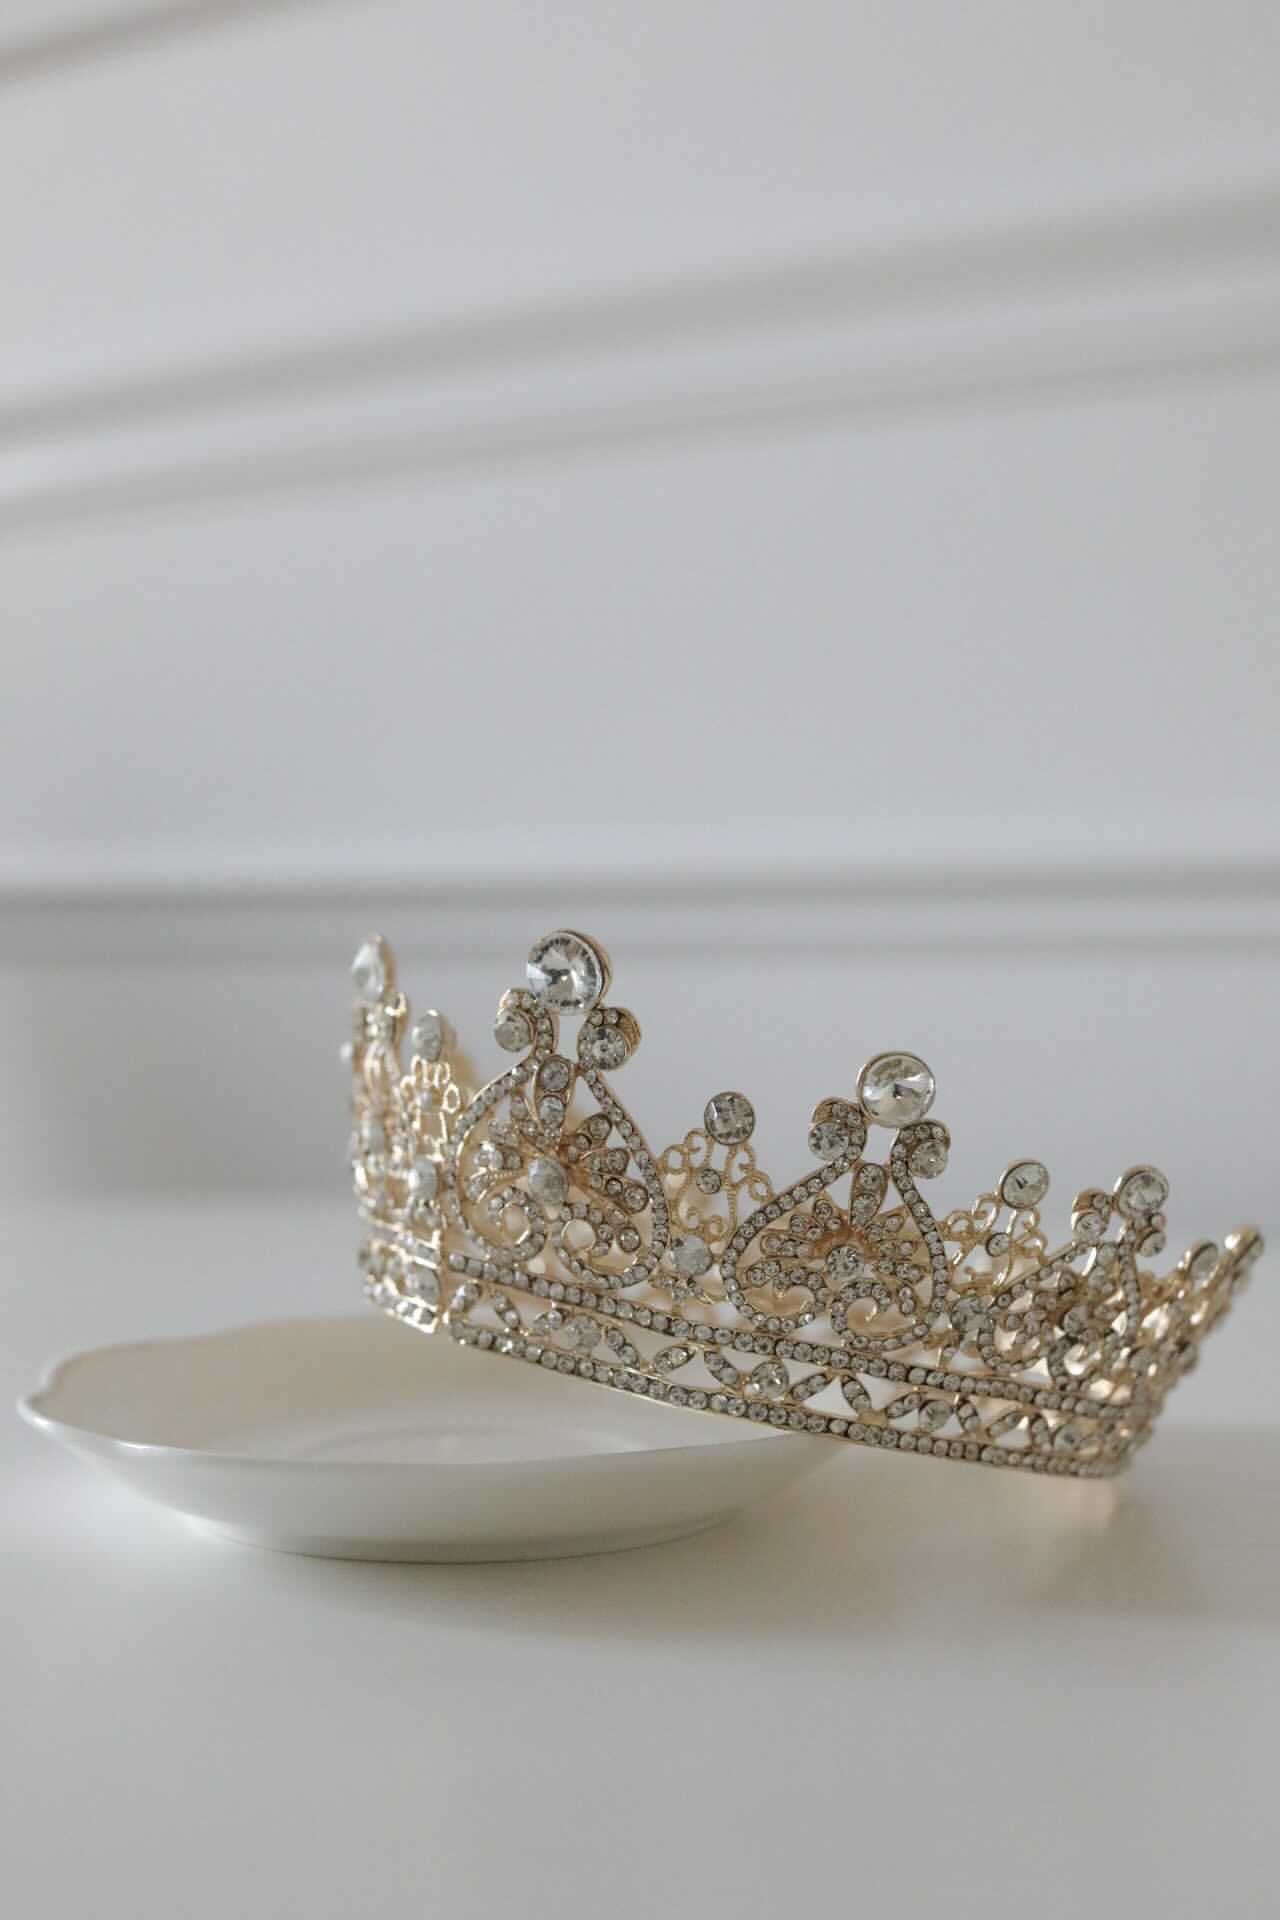 The "Prima Ballerina" Gold Crown